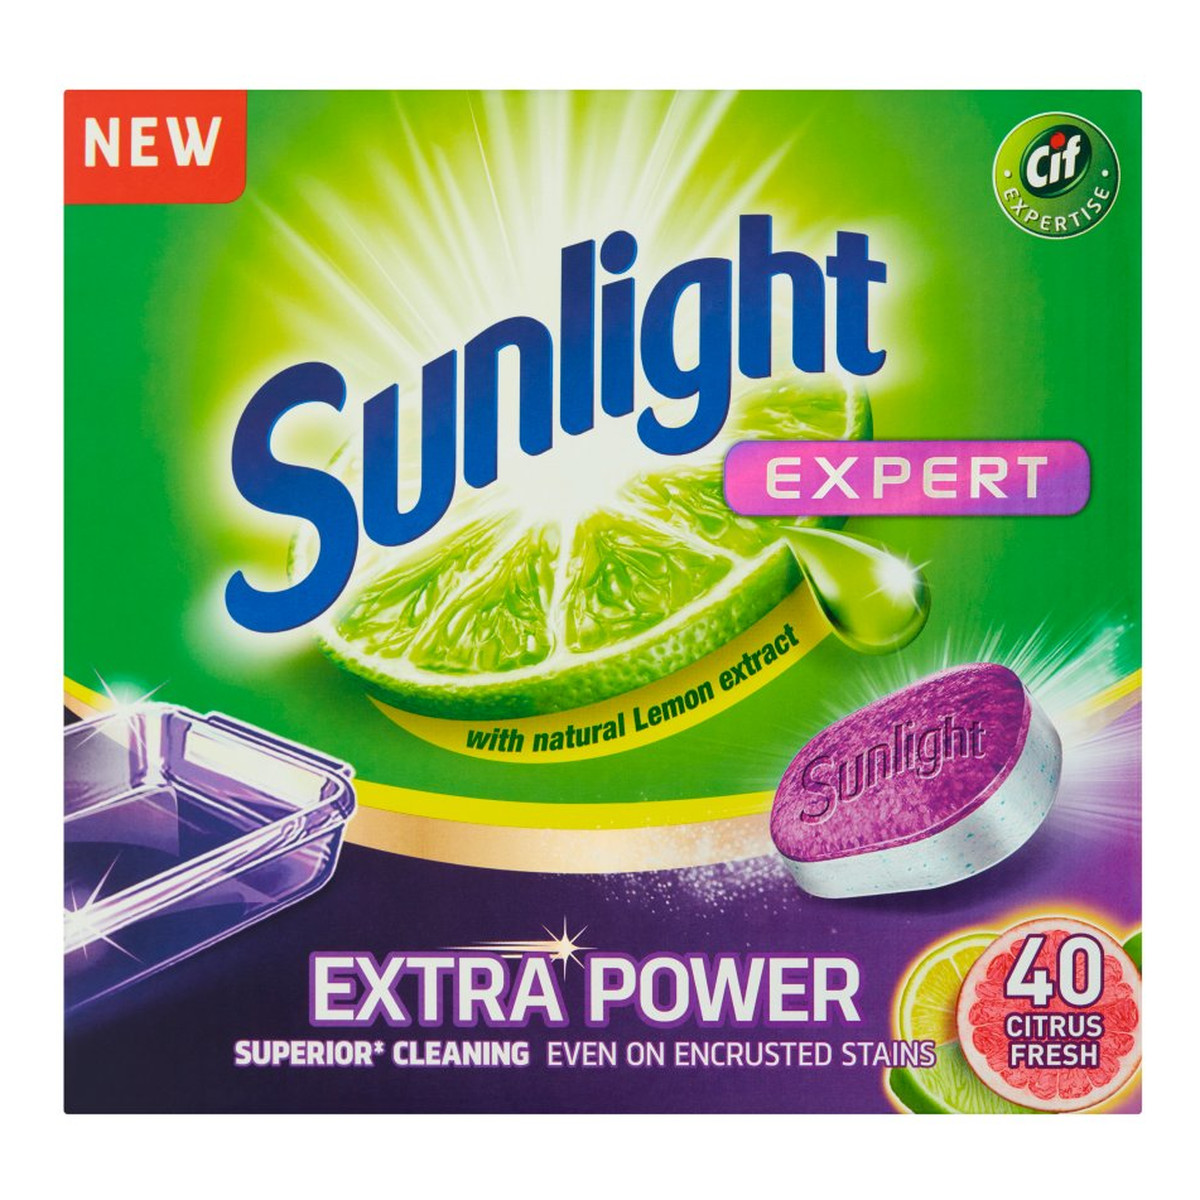 Sunlight Expert Extra Power tabletki do mycia naczyń w zmywarkach Citrus Fresh 40szt 700g